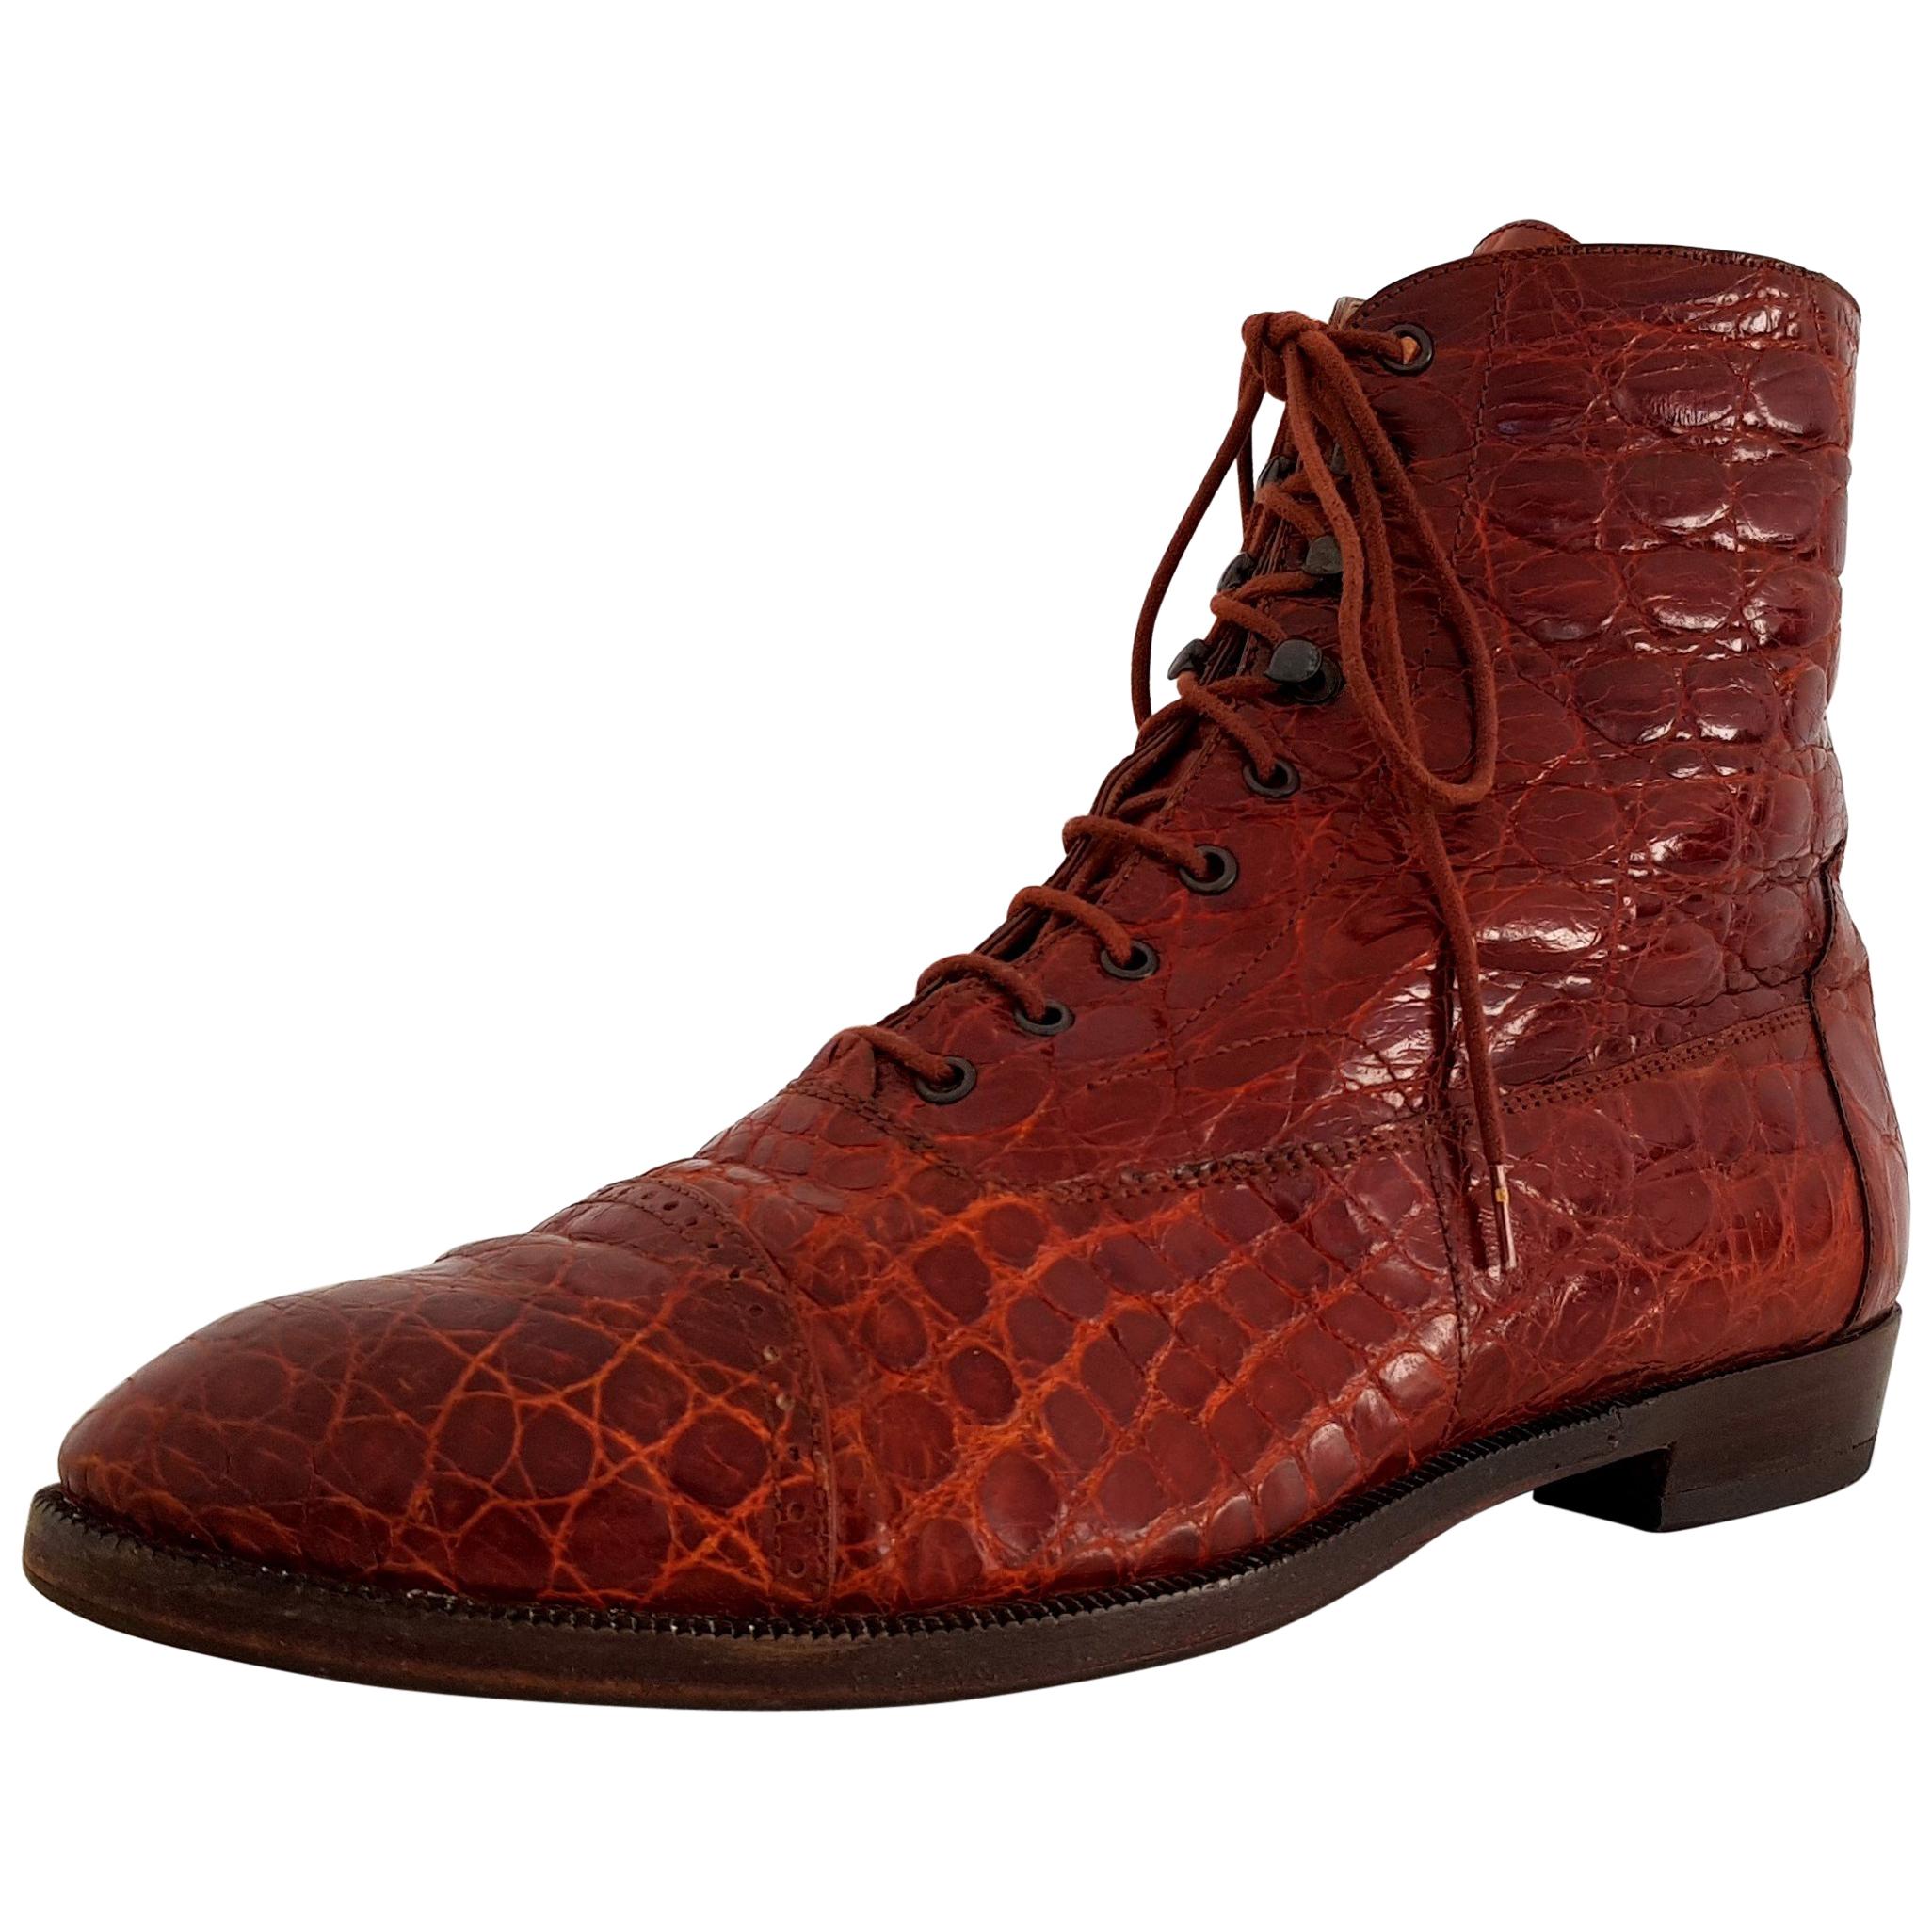 Ugo Rossetti Brown Wild Crocodile Leather Boots. NEW. Size 40 (EU)